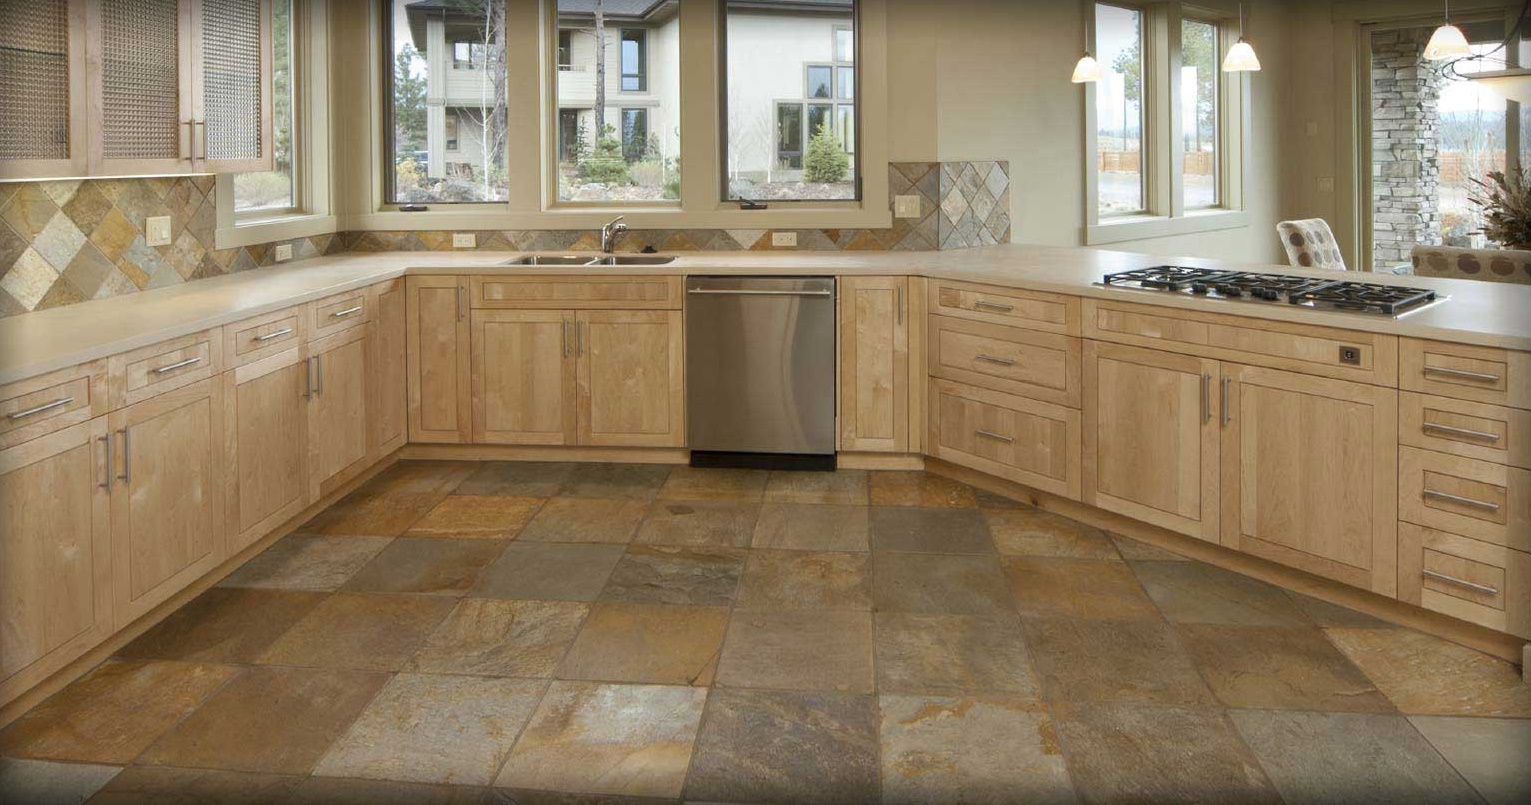 kitchen floor tile designs photo - 10